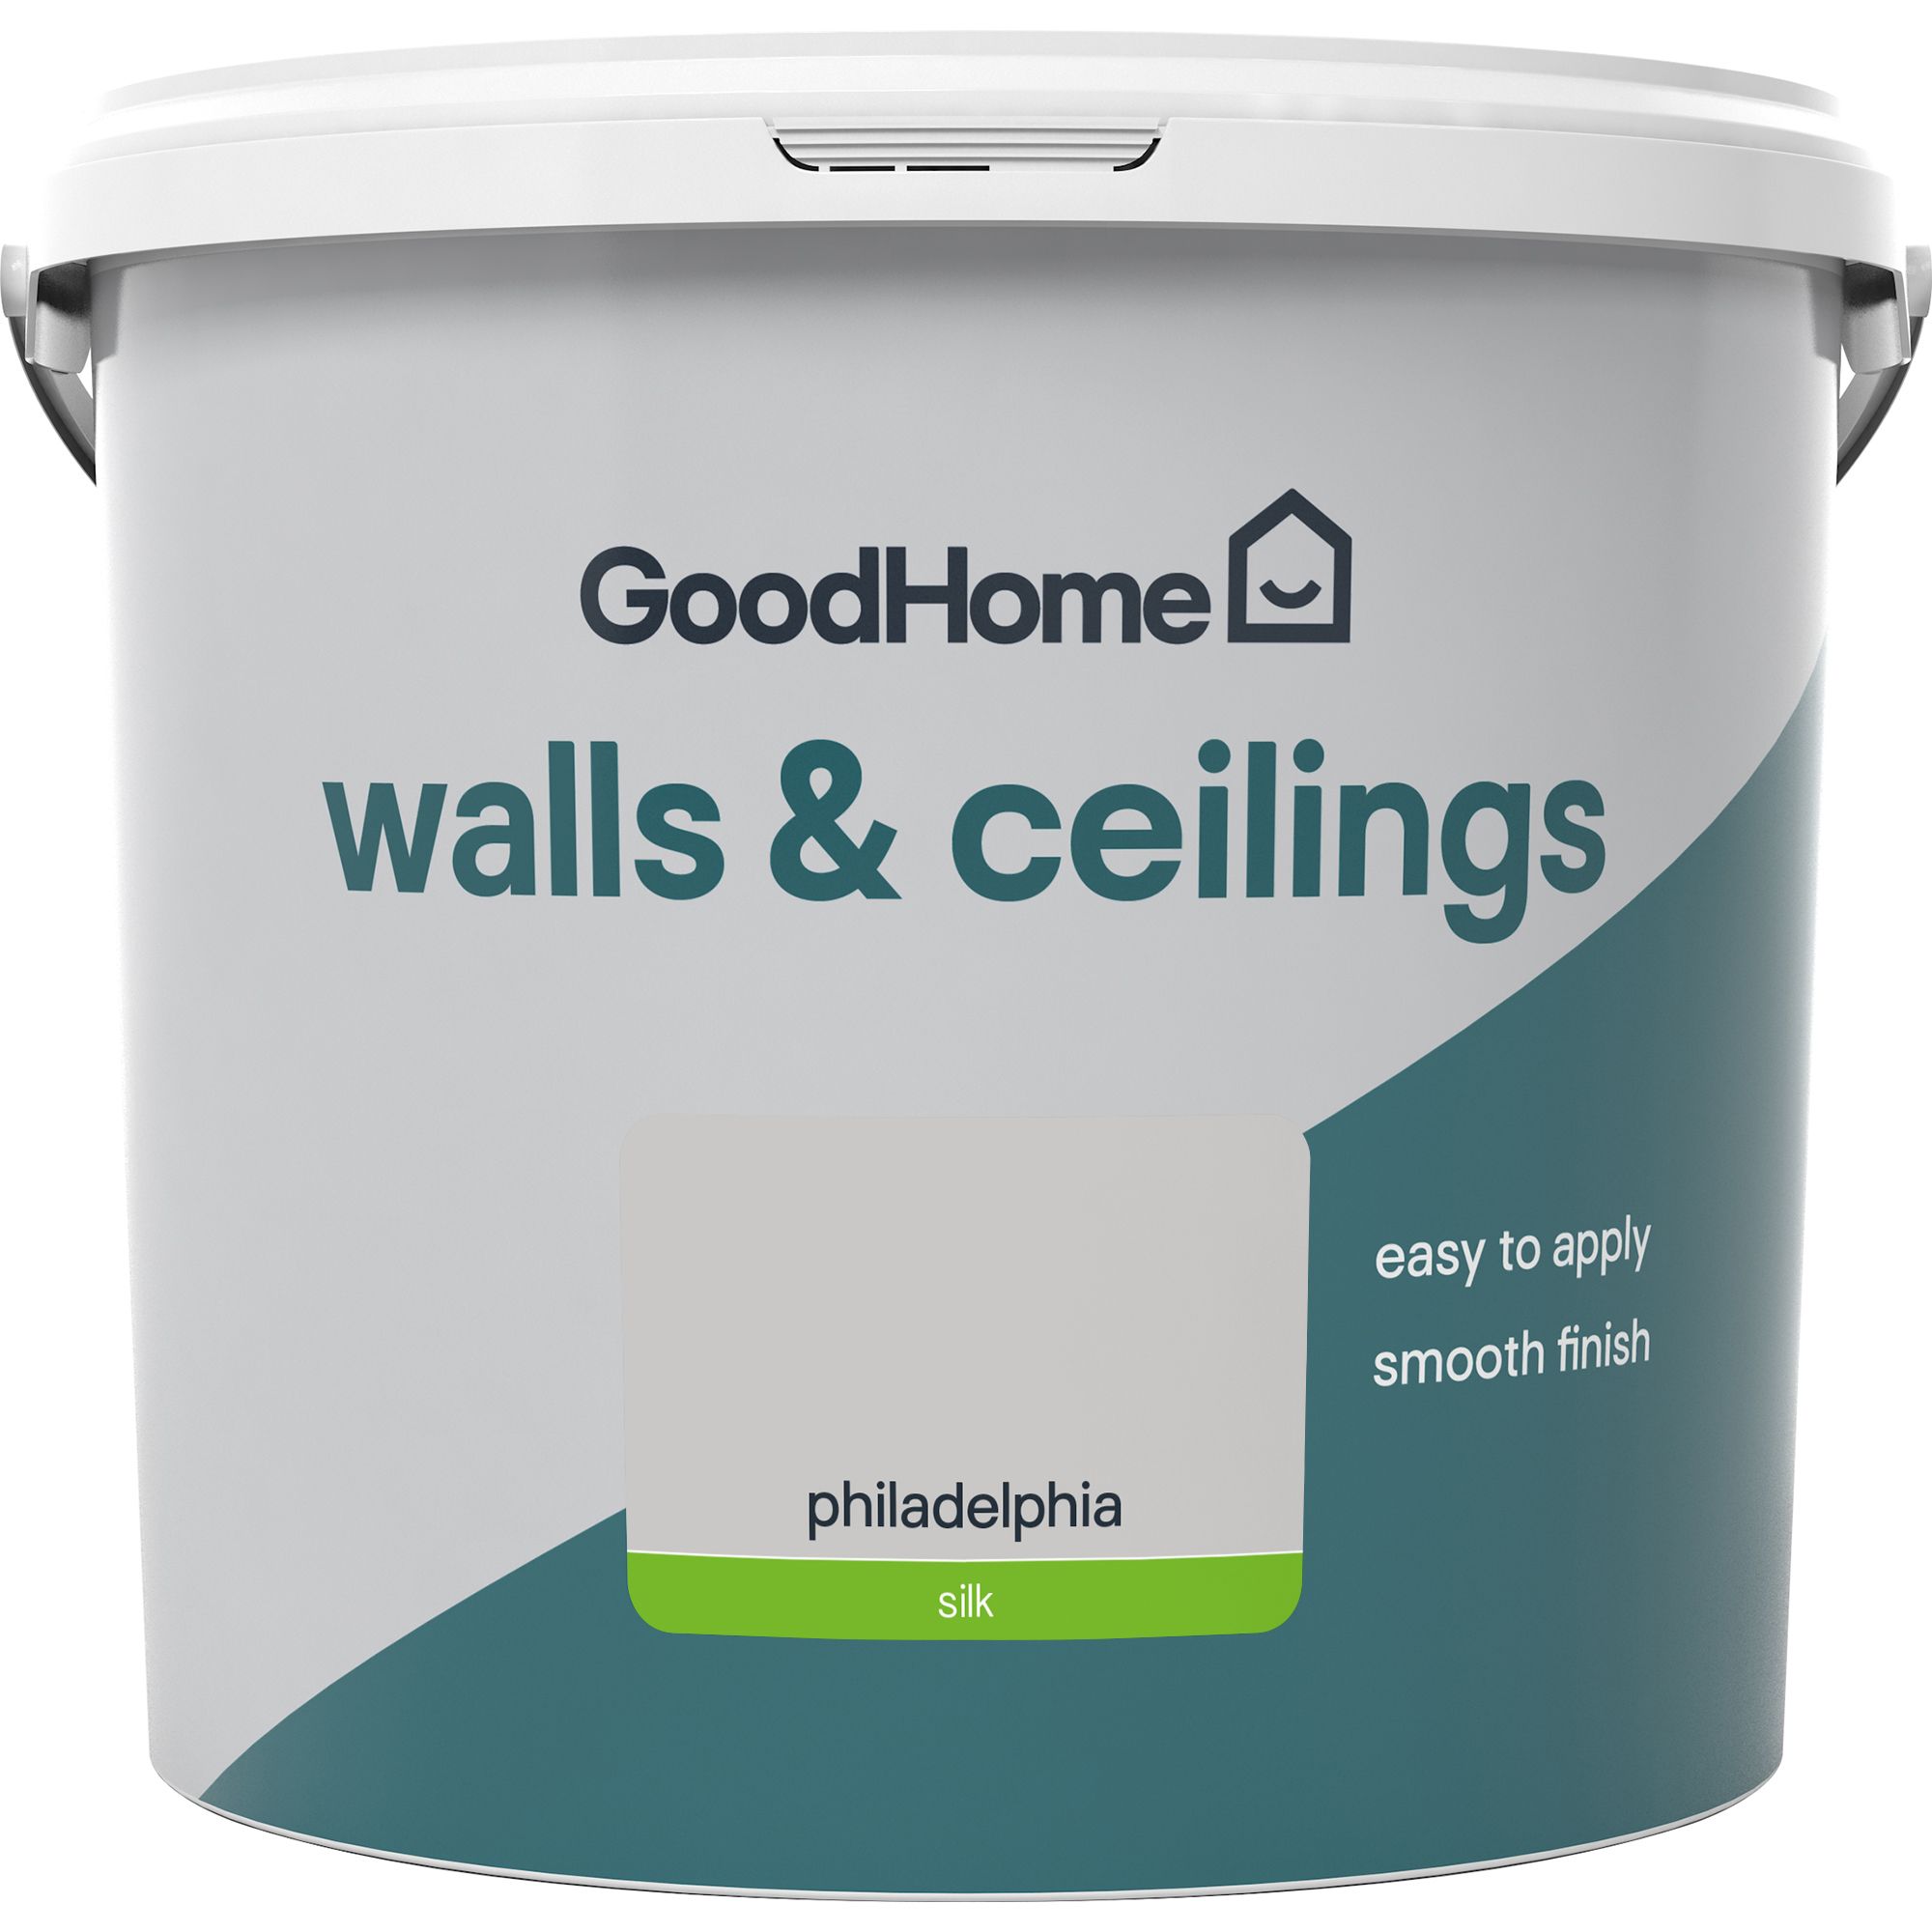 GoodHome Walls & ceilings Philadelphia Silk Emulsion paint, 5L